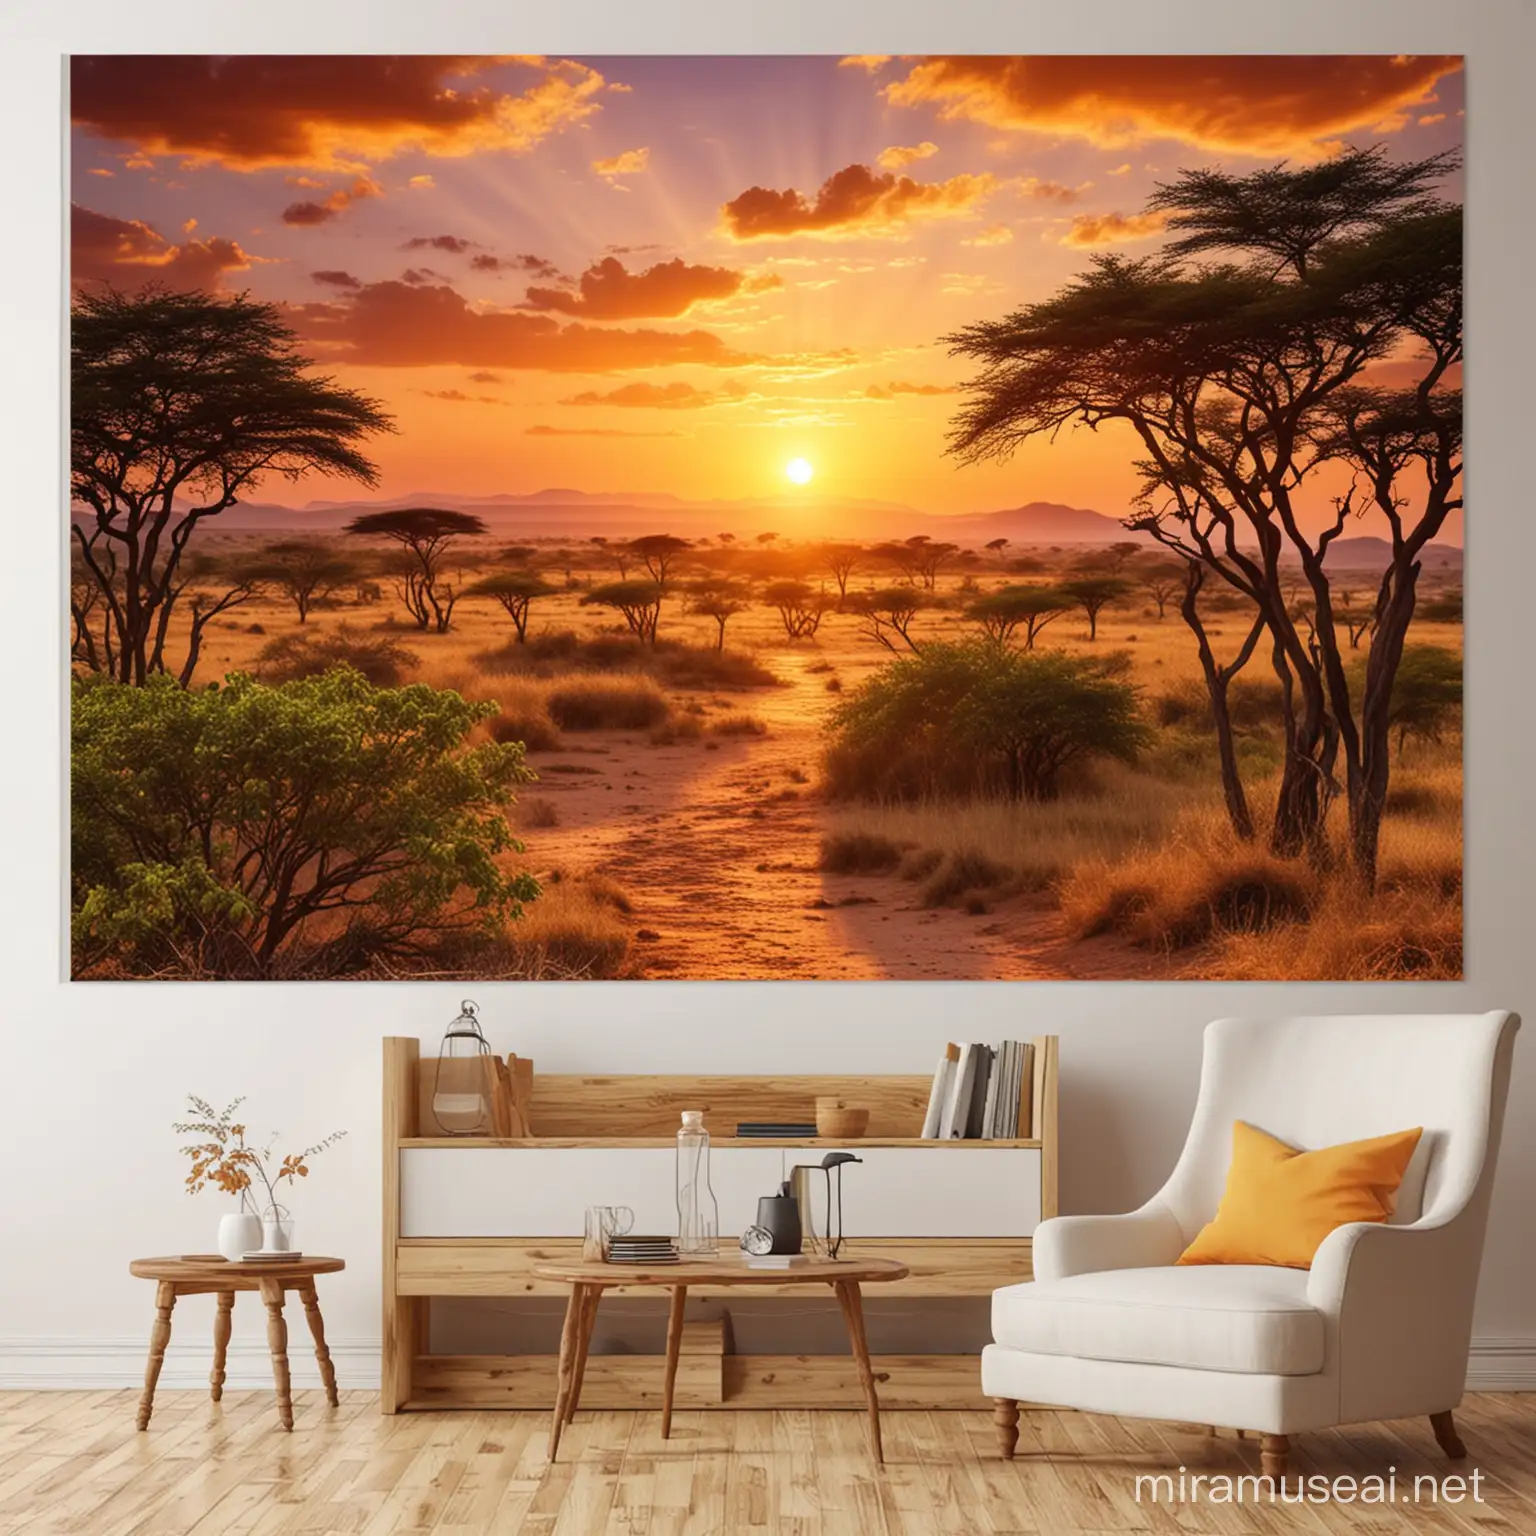 Vibrant African Sunset Landscape Spectacular Horizon Over Savanna